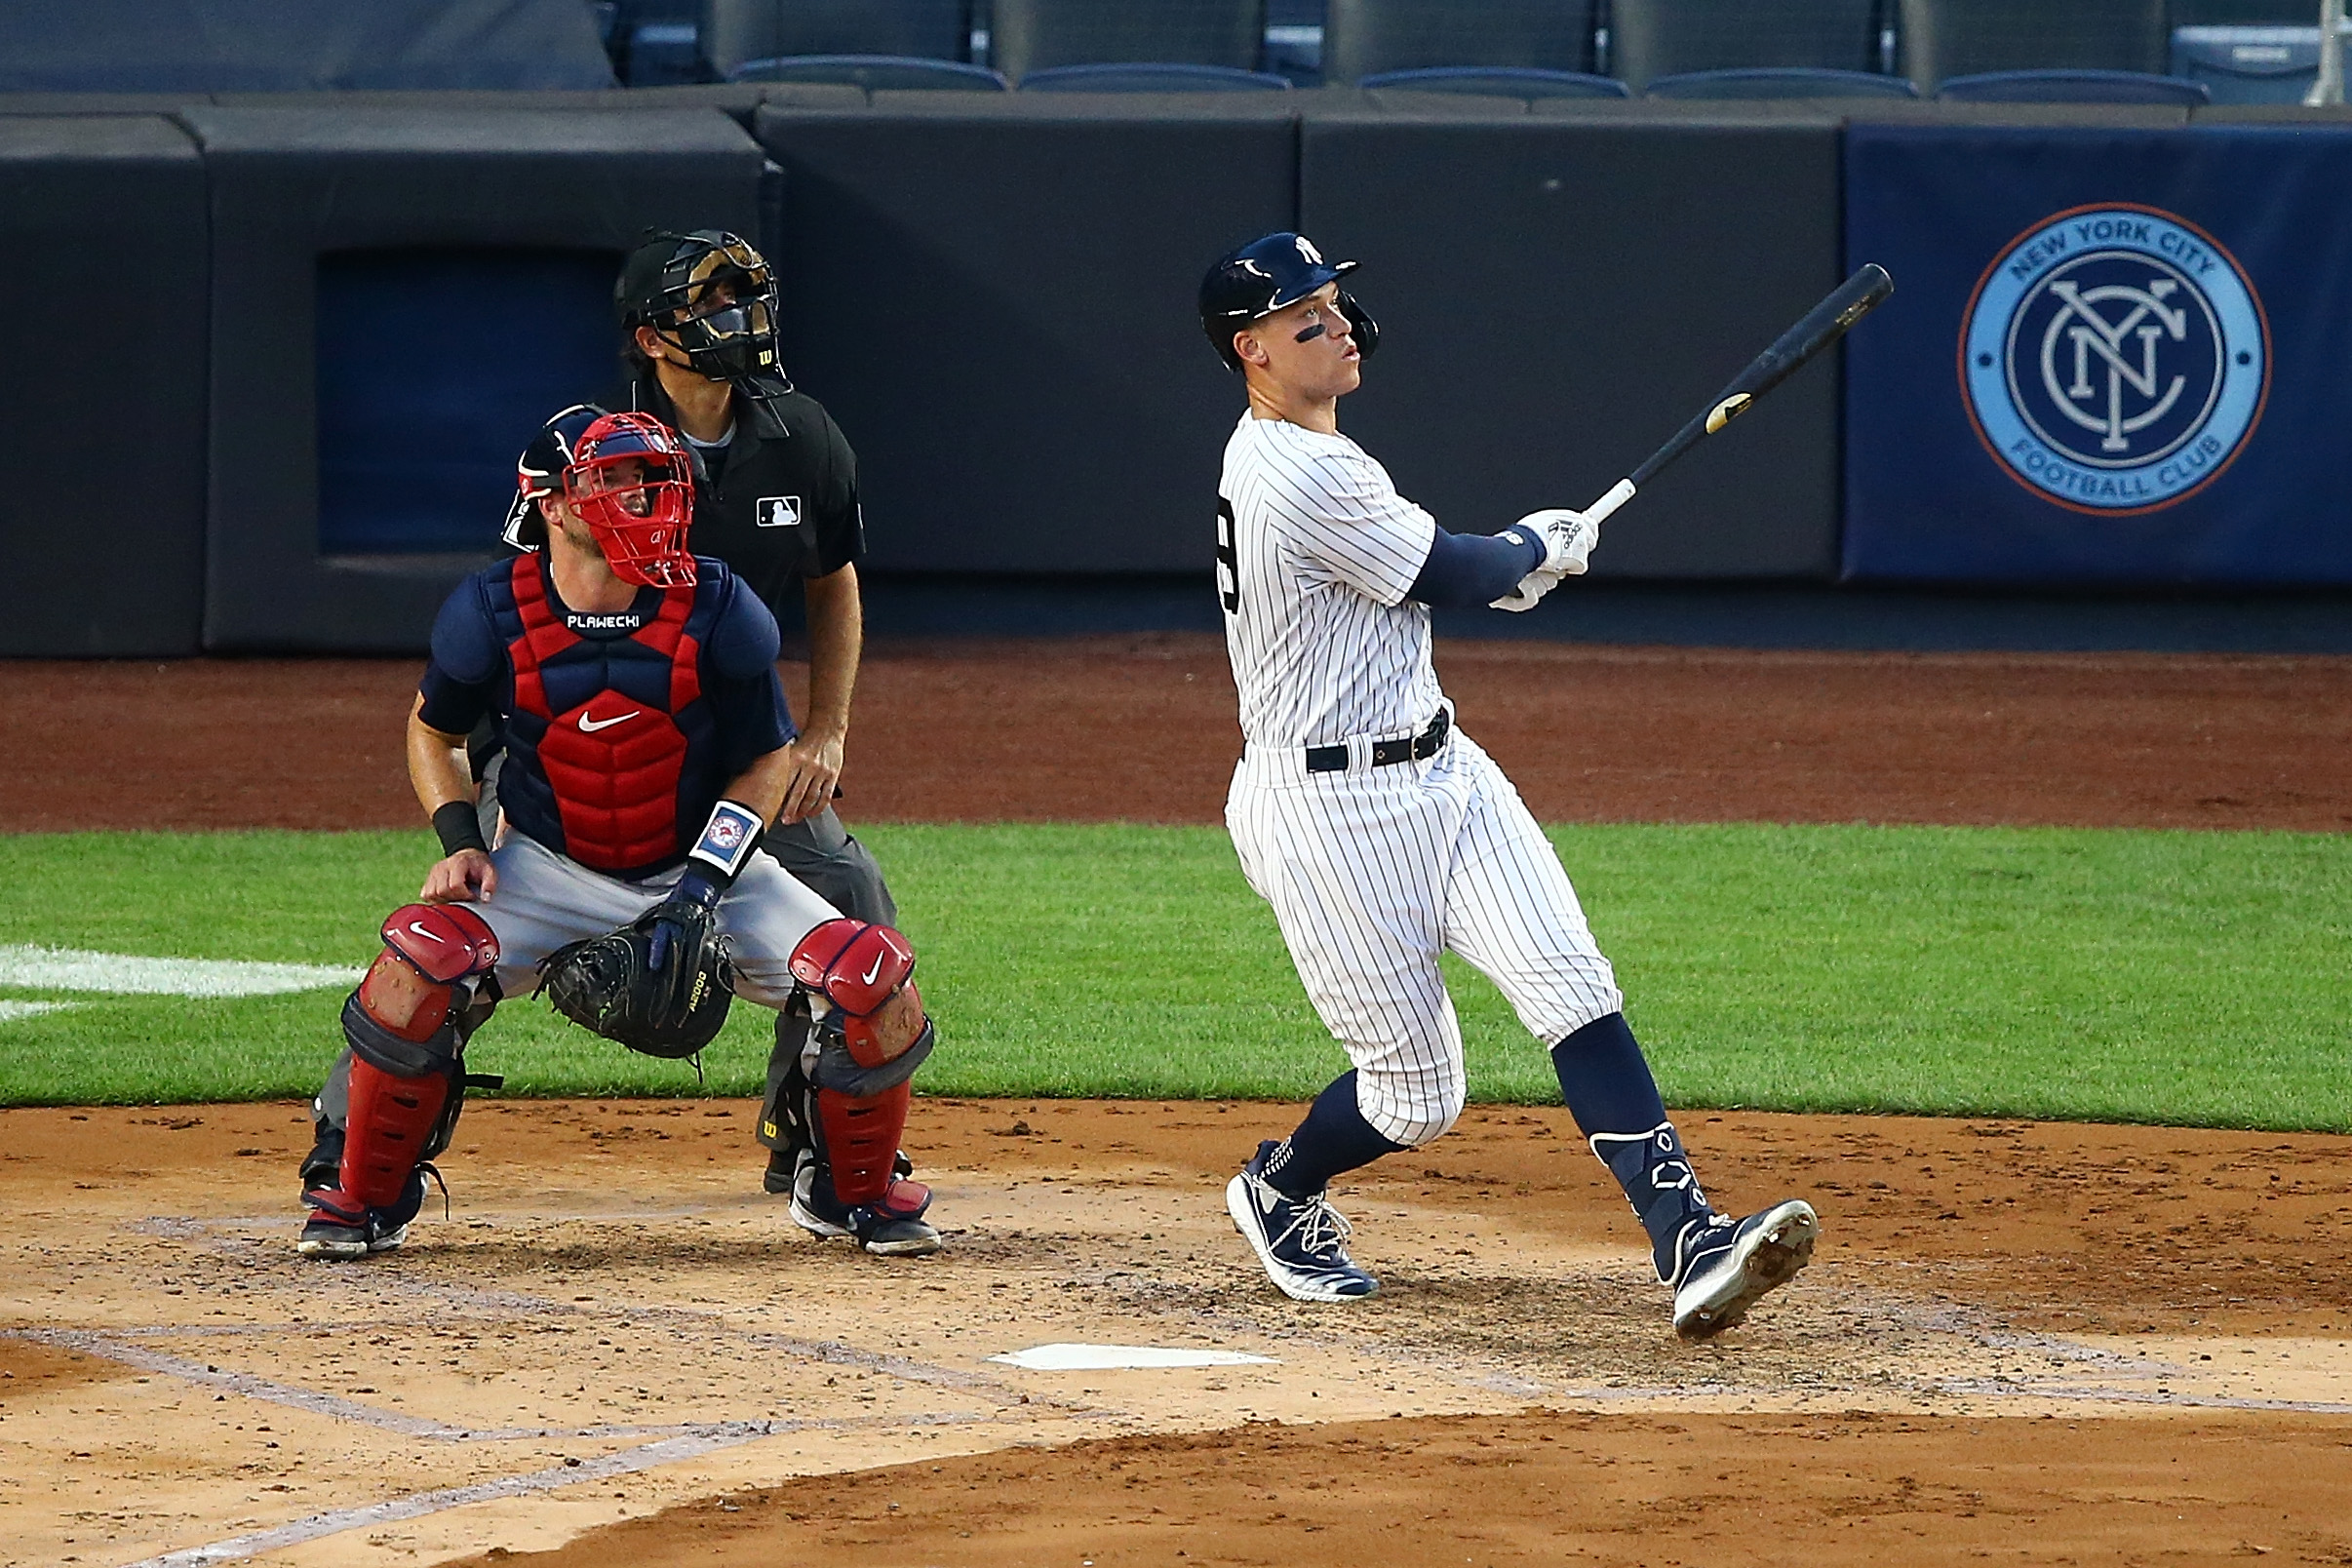 Red Sox errors give Yankees runs to back Nestor Cor aaron judge